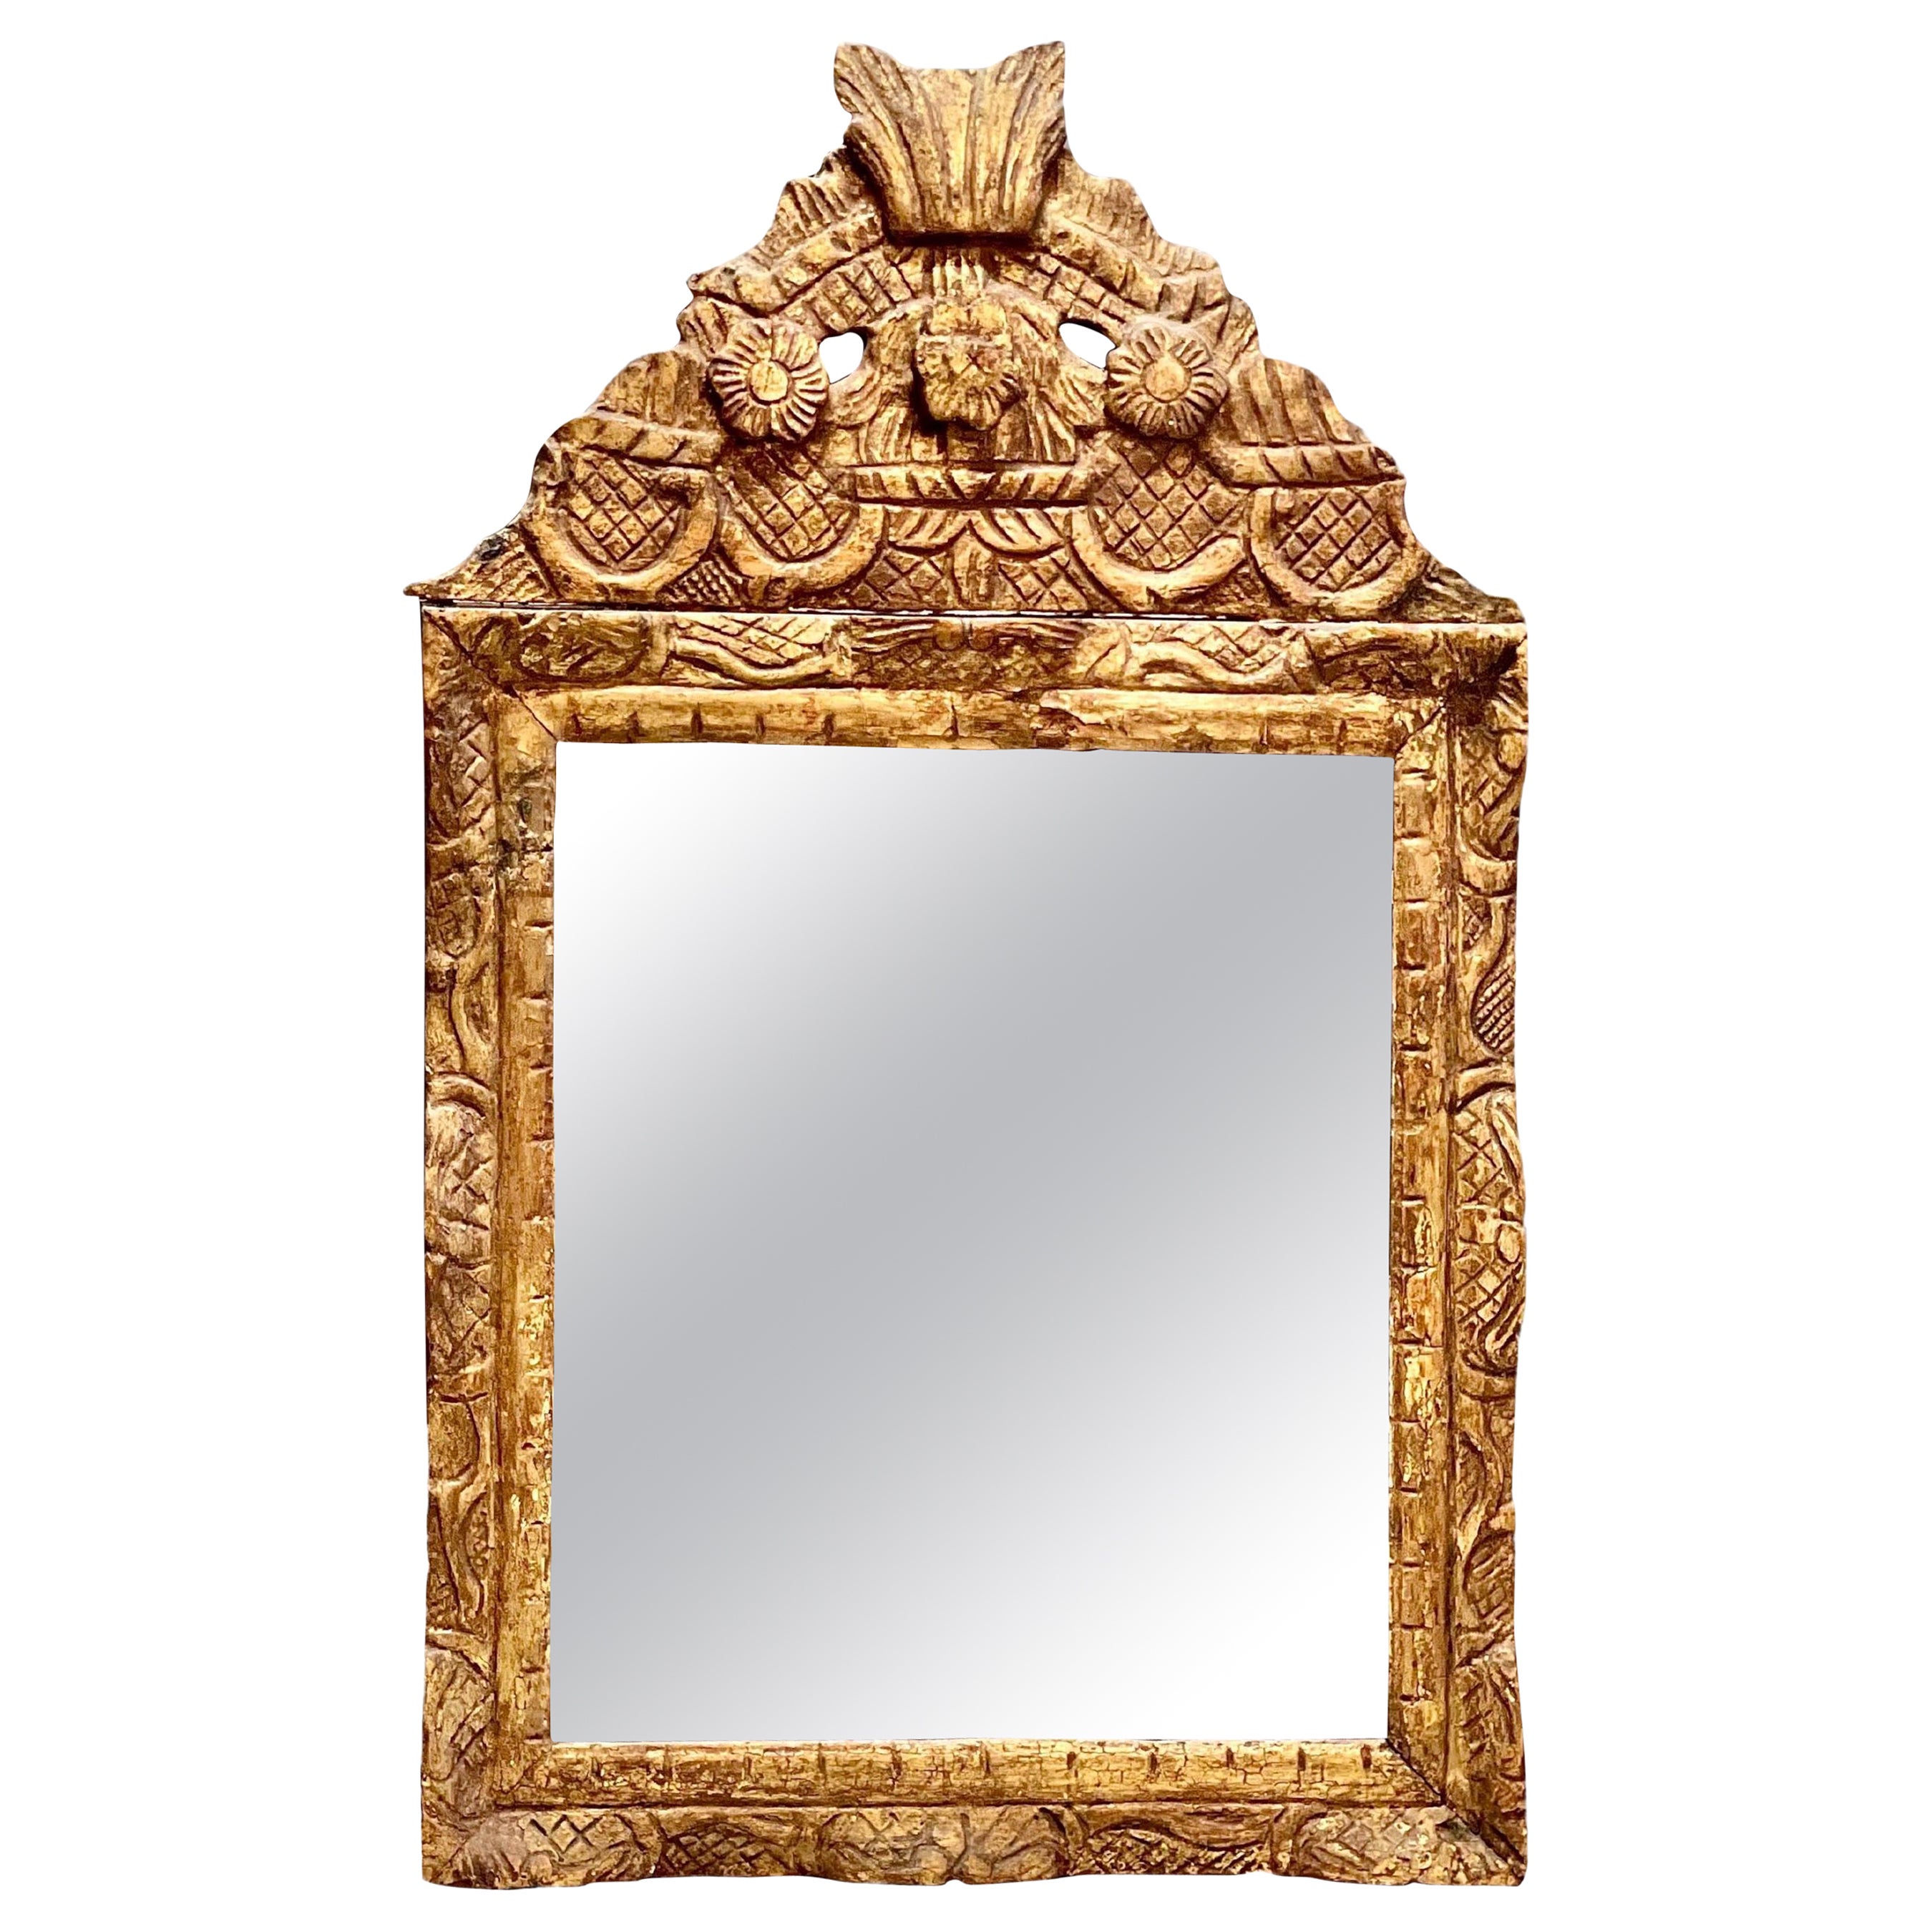  18th Century French Regence Giltwood Boudoir Mirror